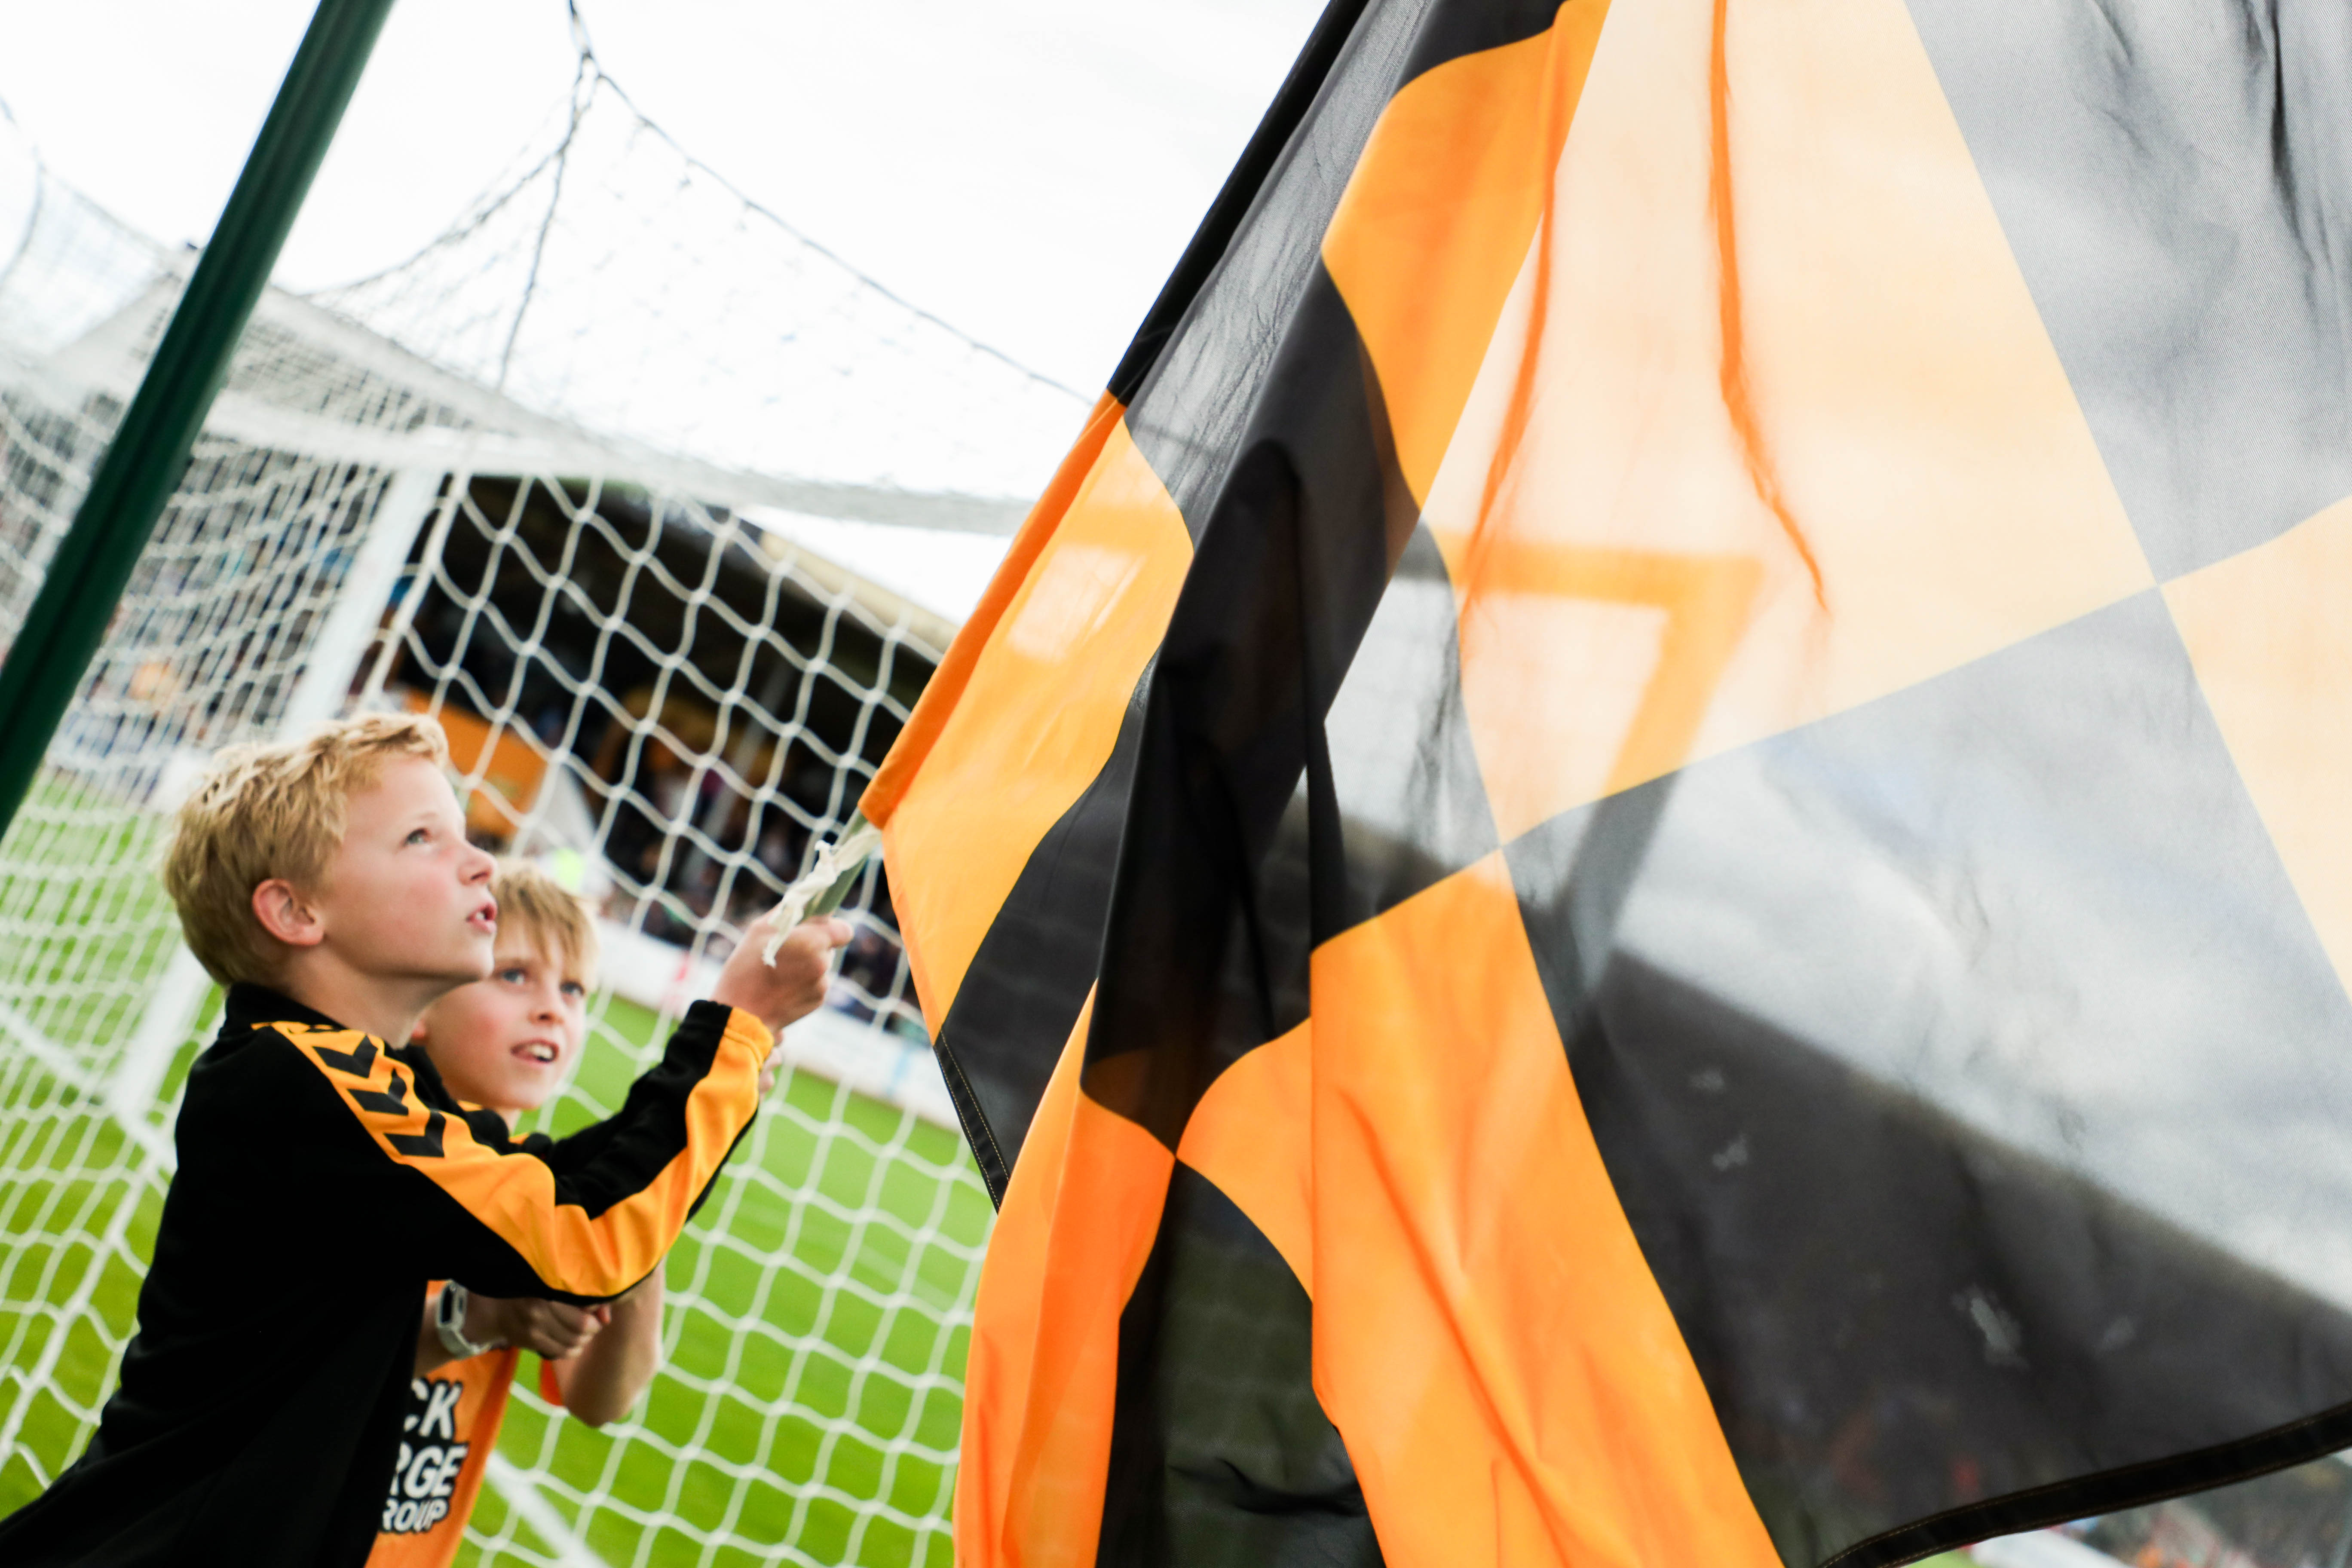 A young fan hoisting a flag ahead of kick-off